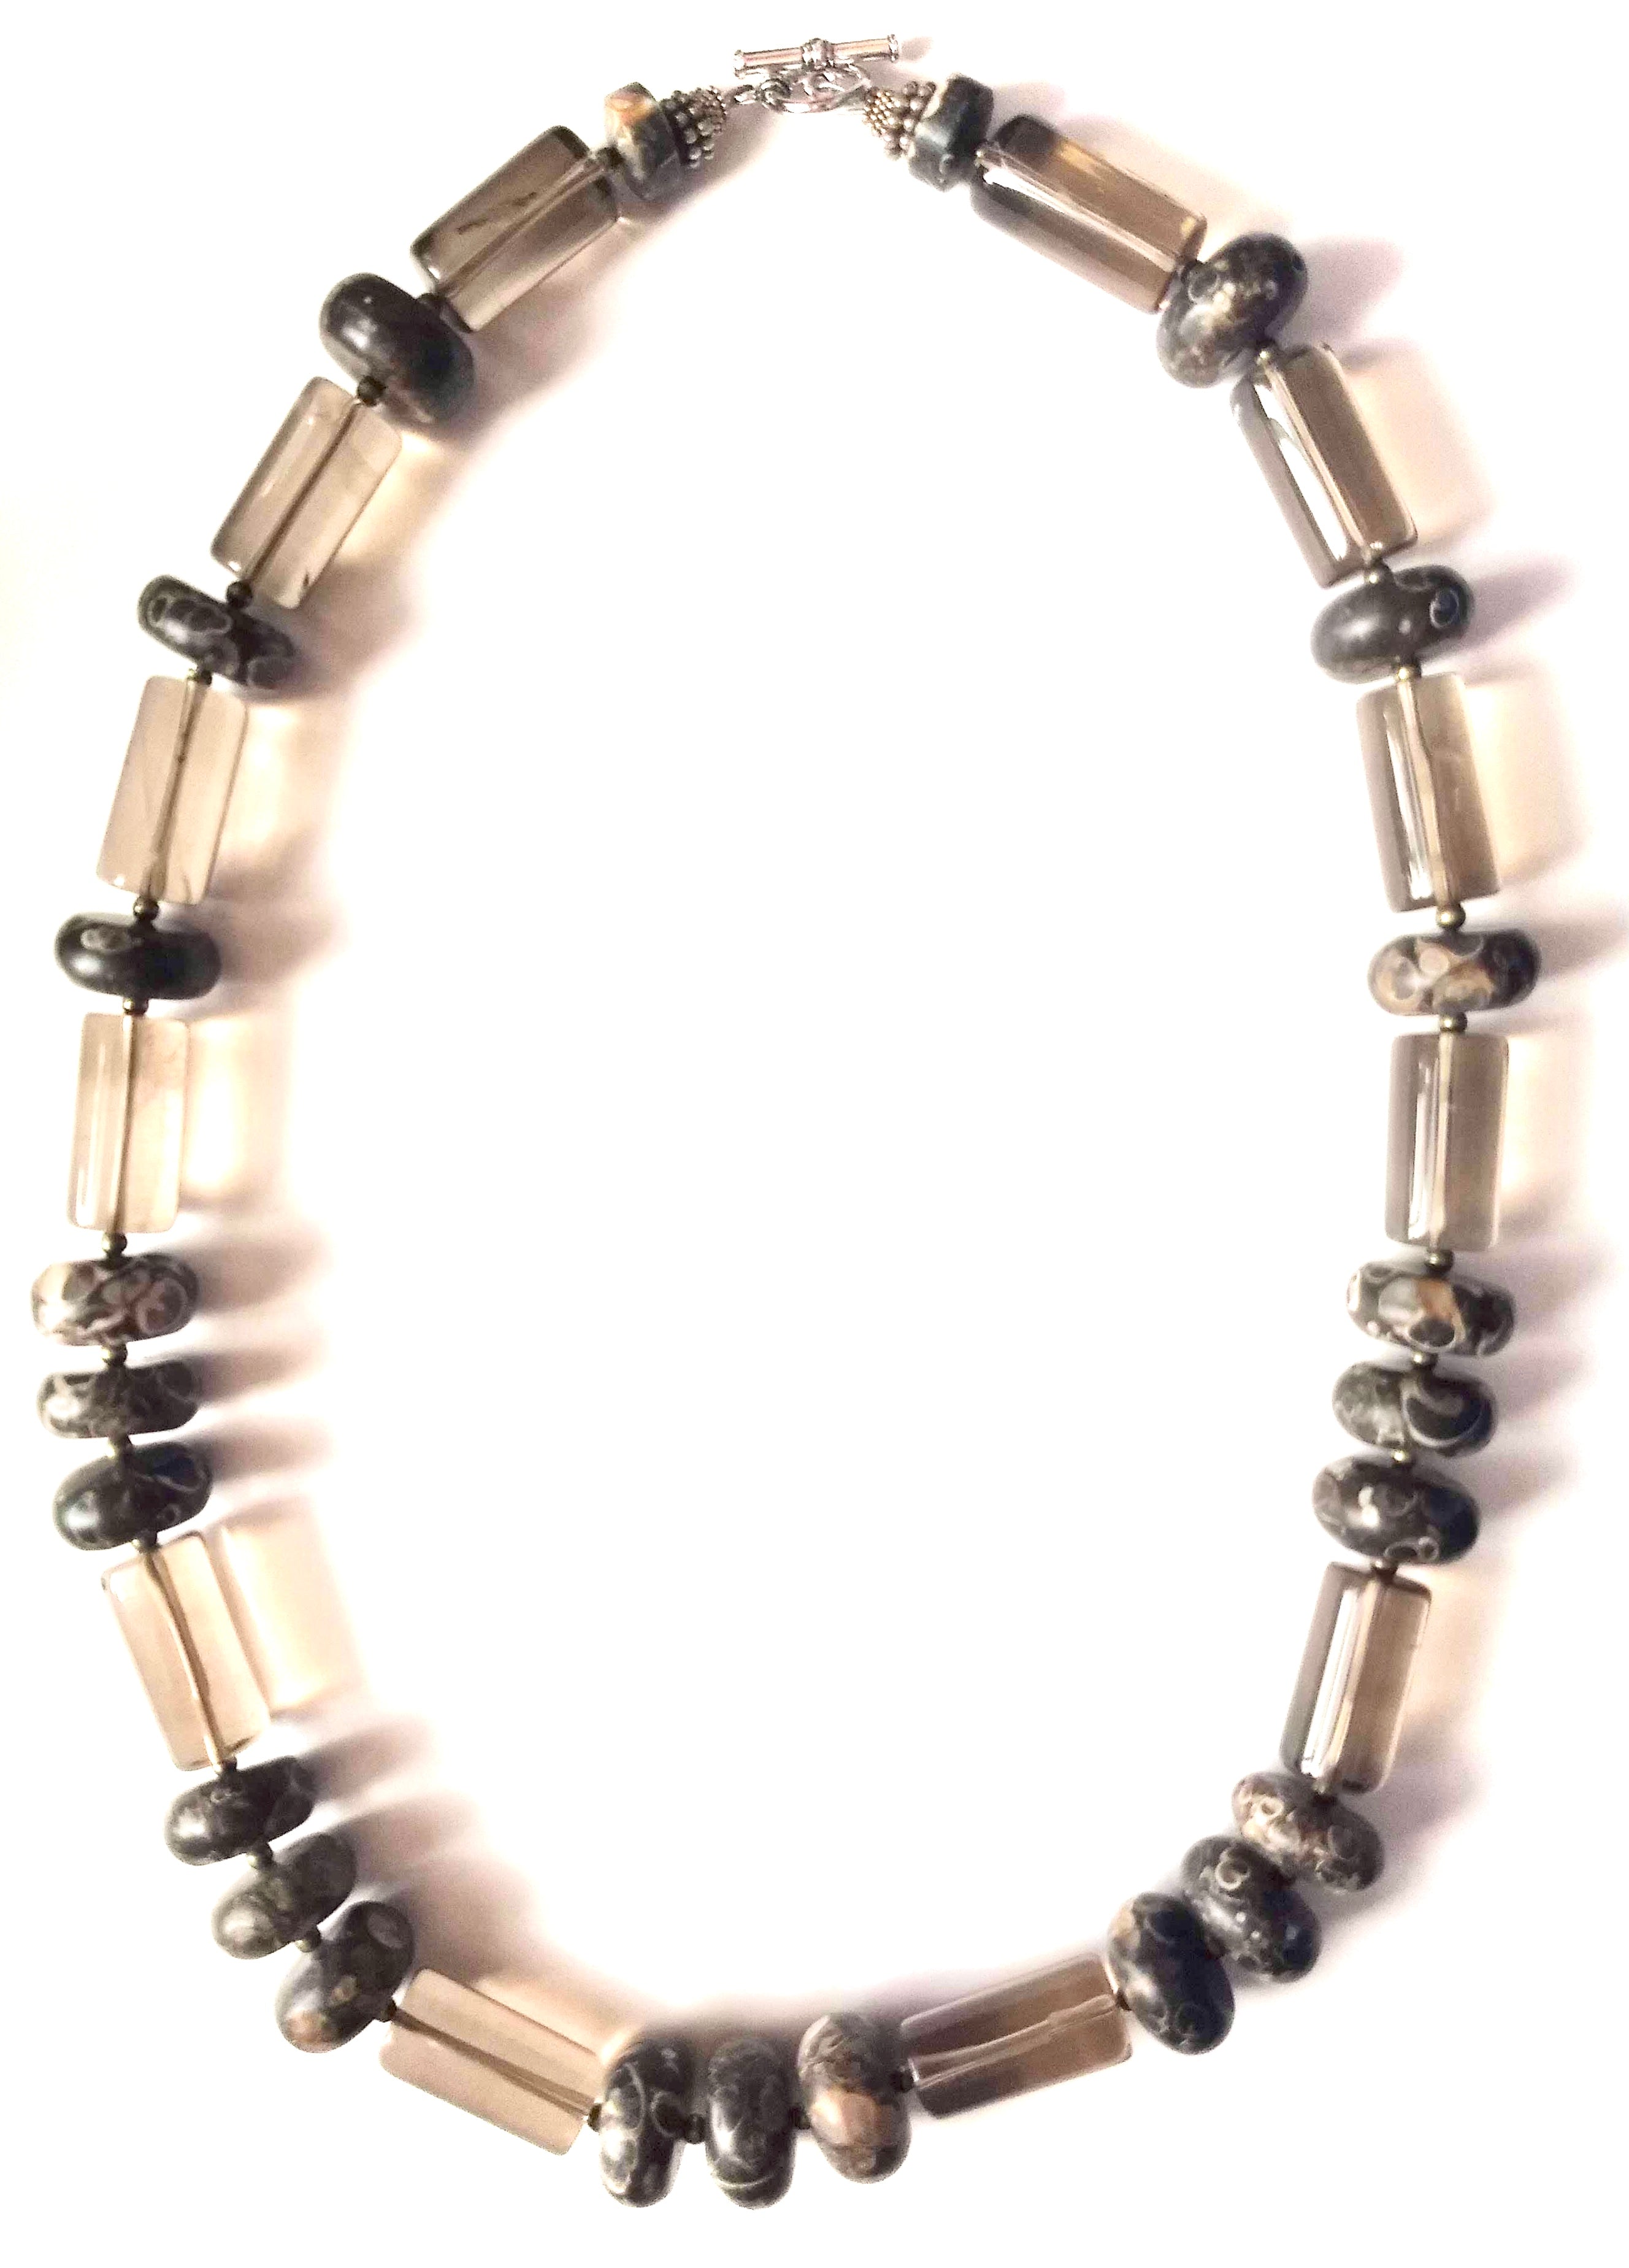 quartz necklace